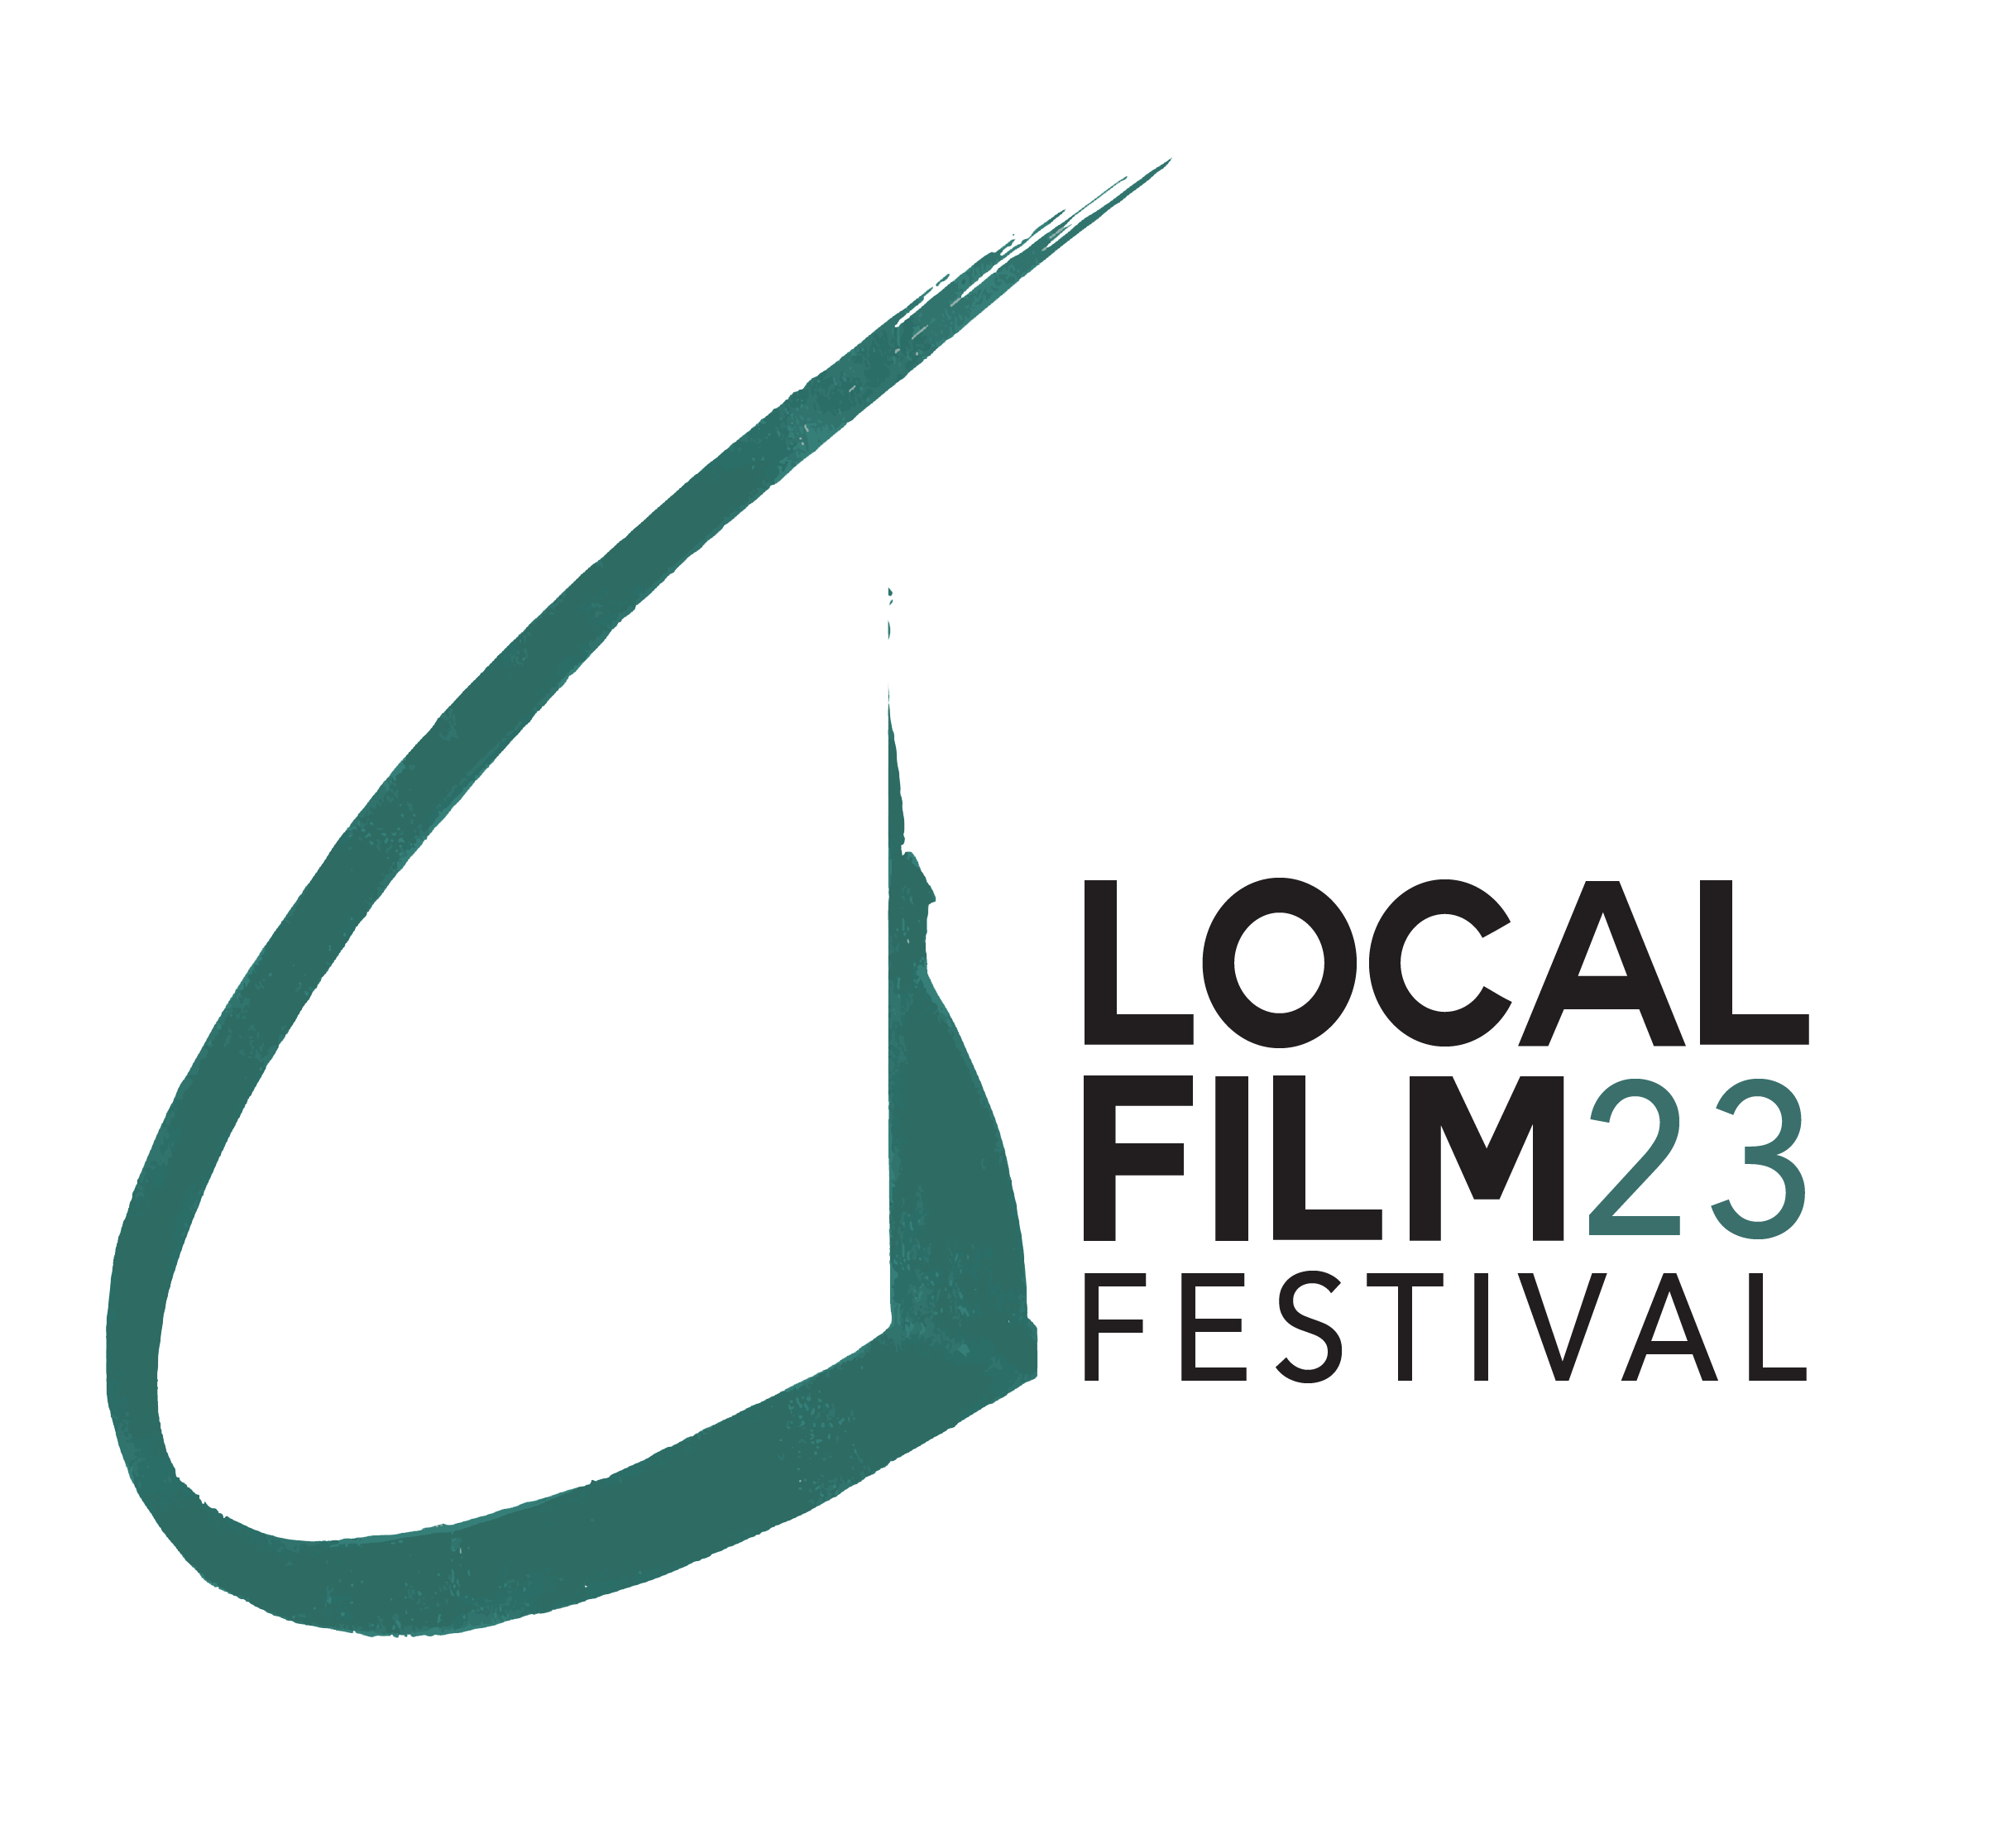 Glocal Film Festival